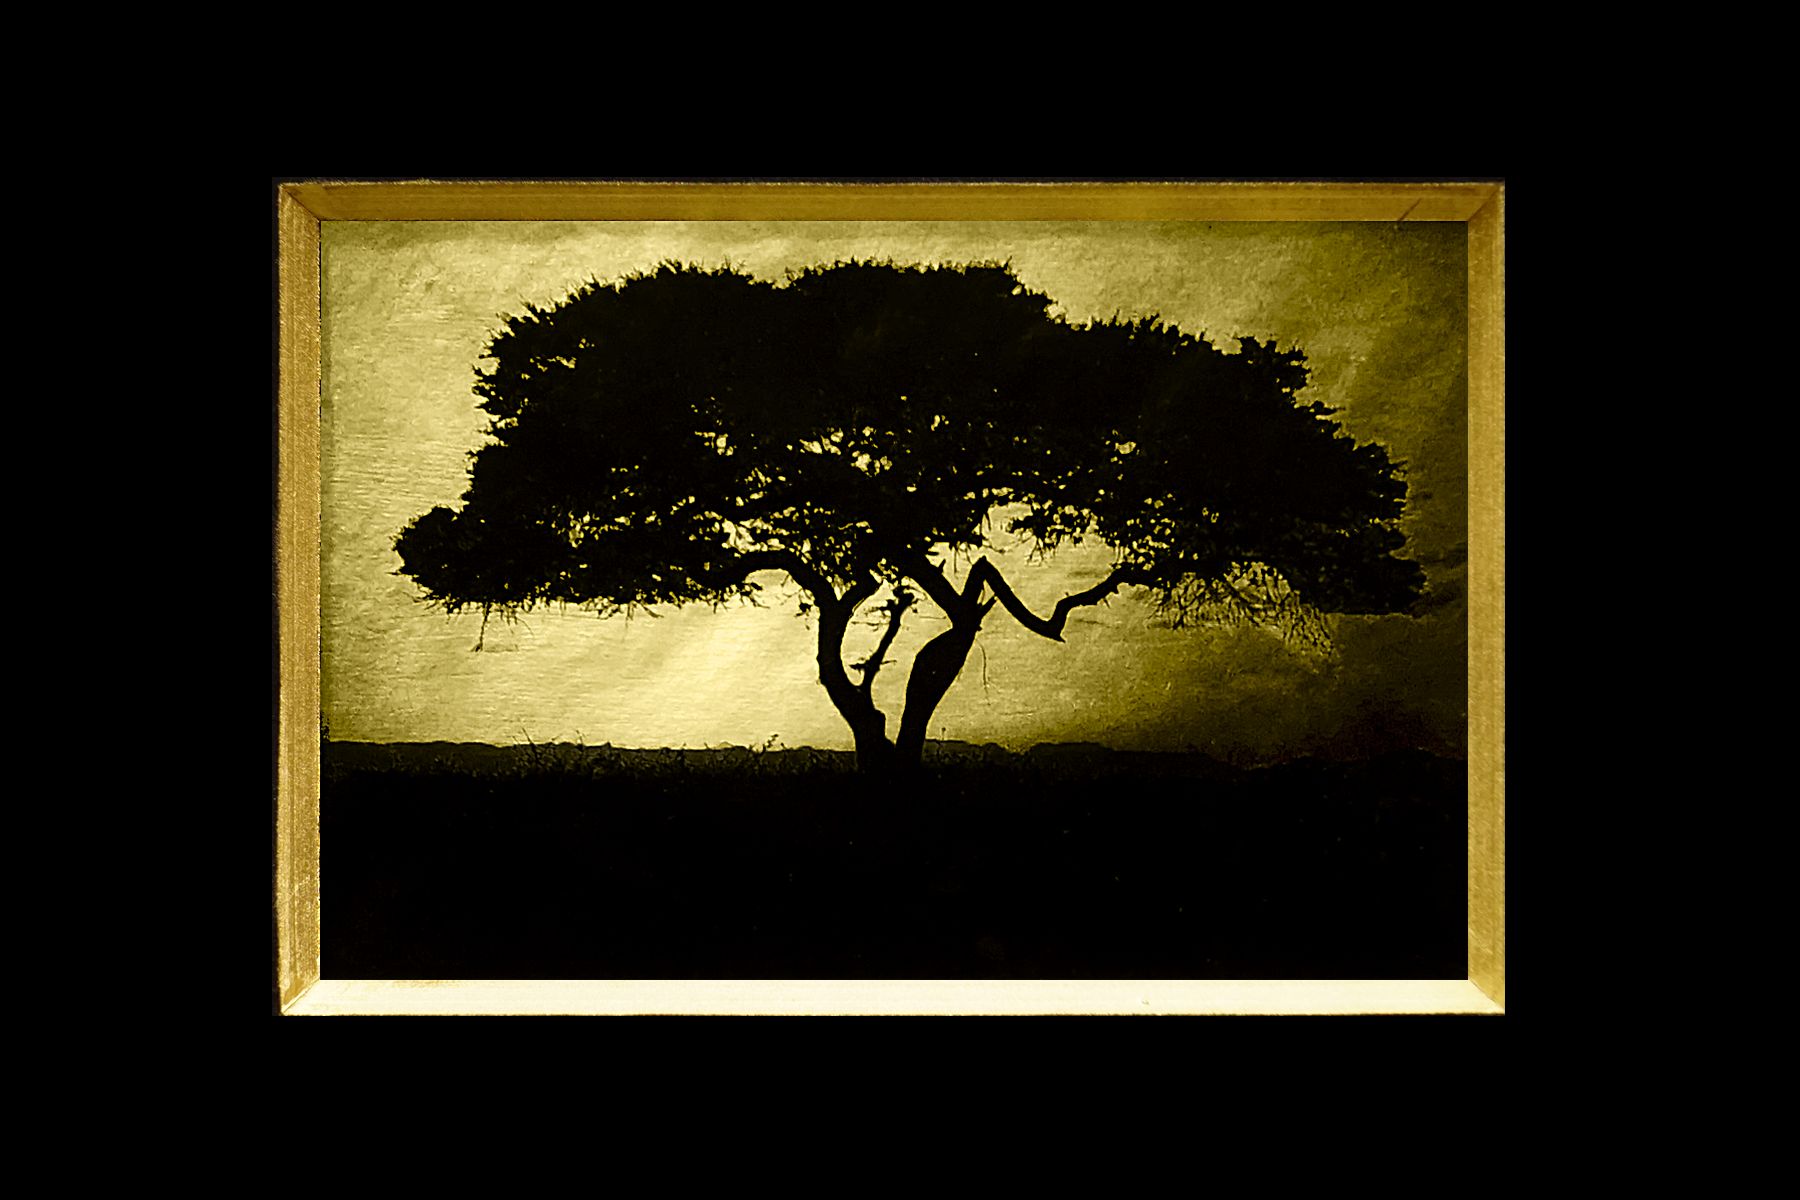 Acacia tree, Landscape, Africa, Tanzania, African Wildlife, Serengeti, Alternative Process, Platinum over gold leaf, savannah gold, Chris Dei Photography